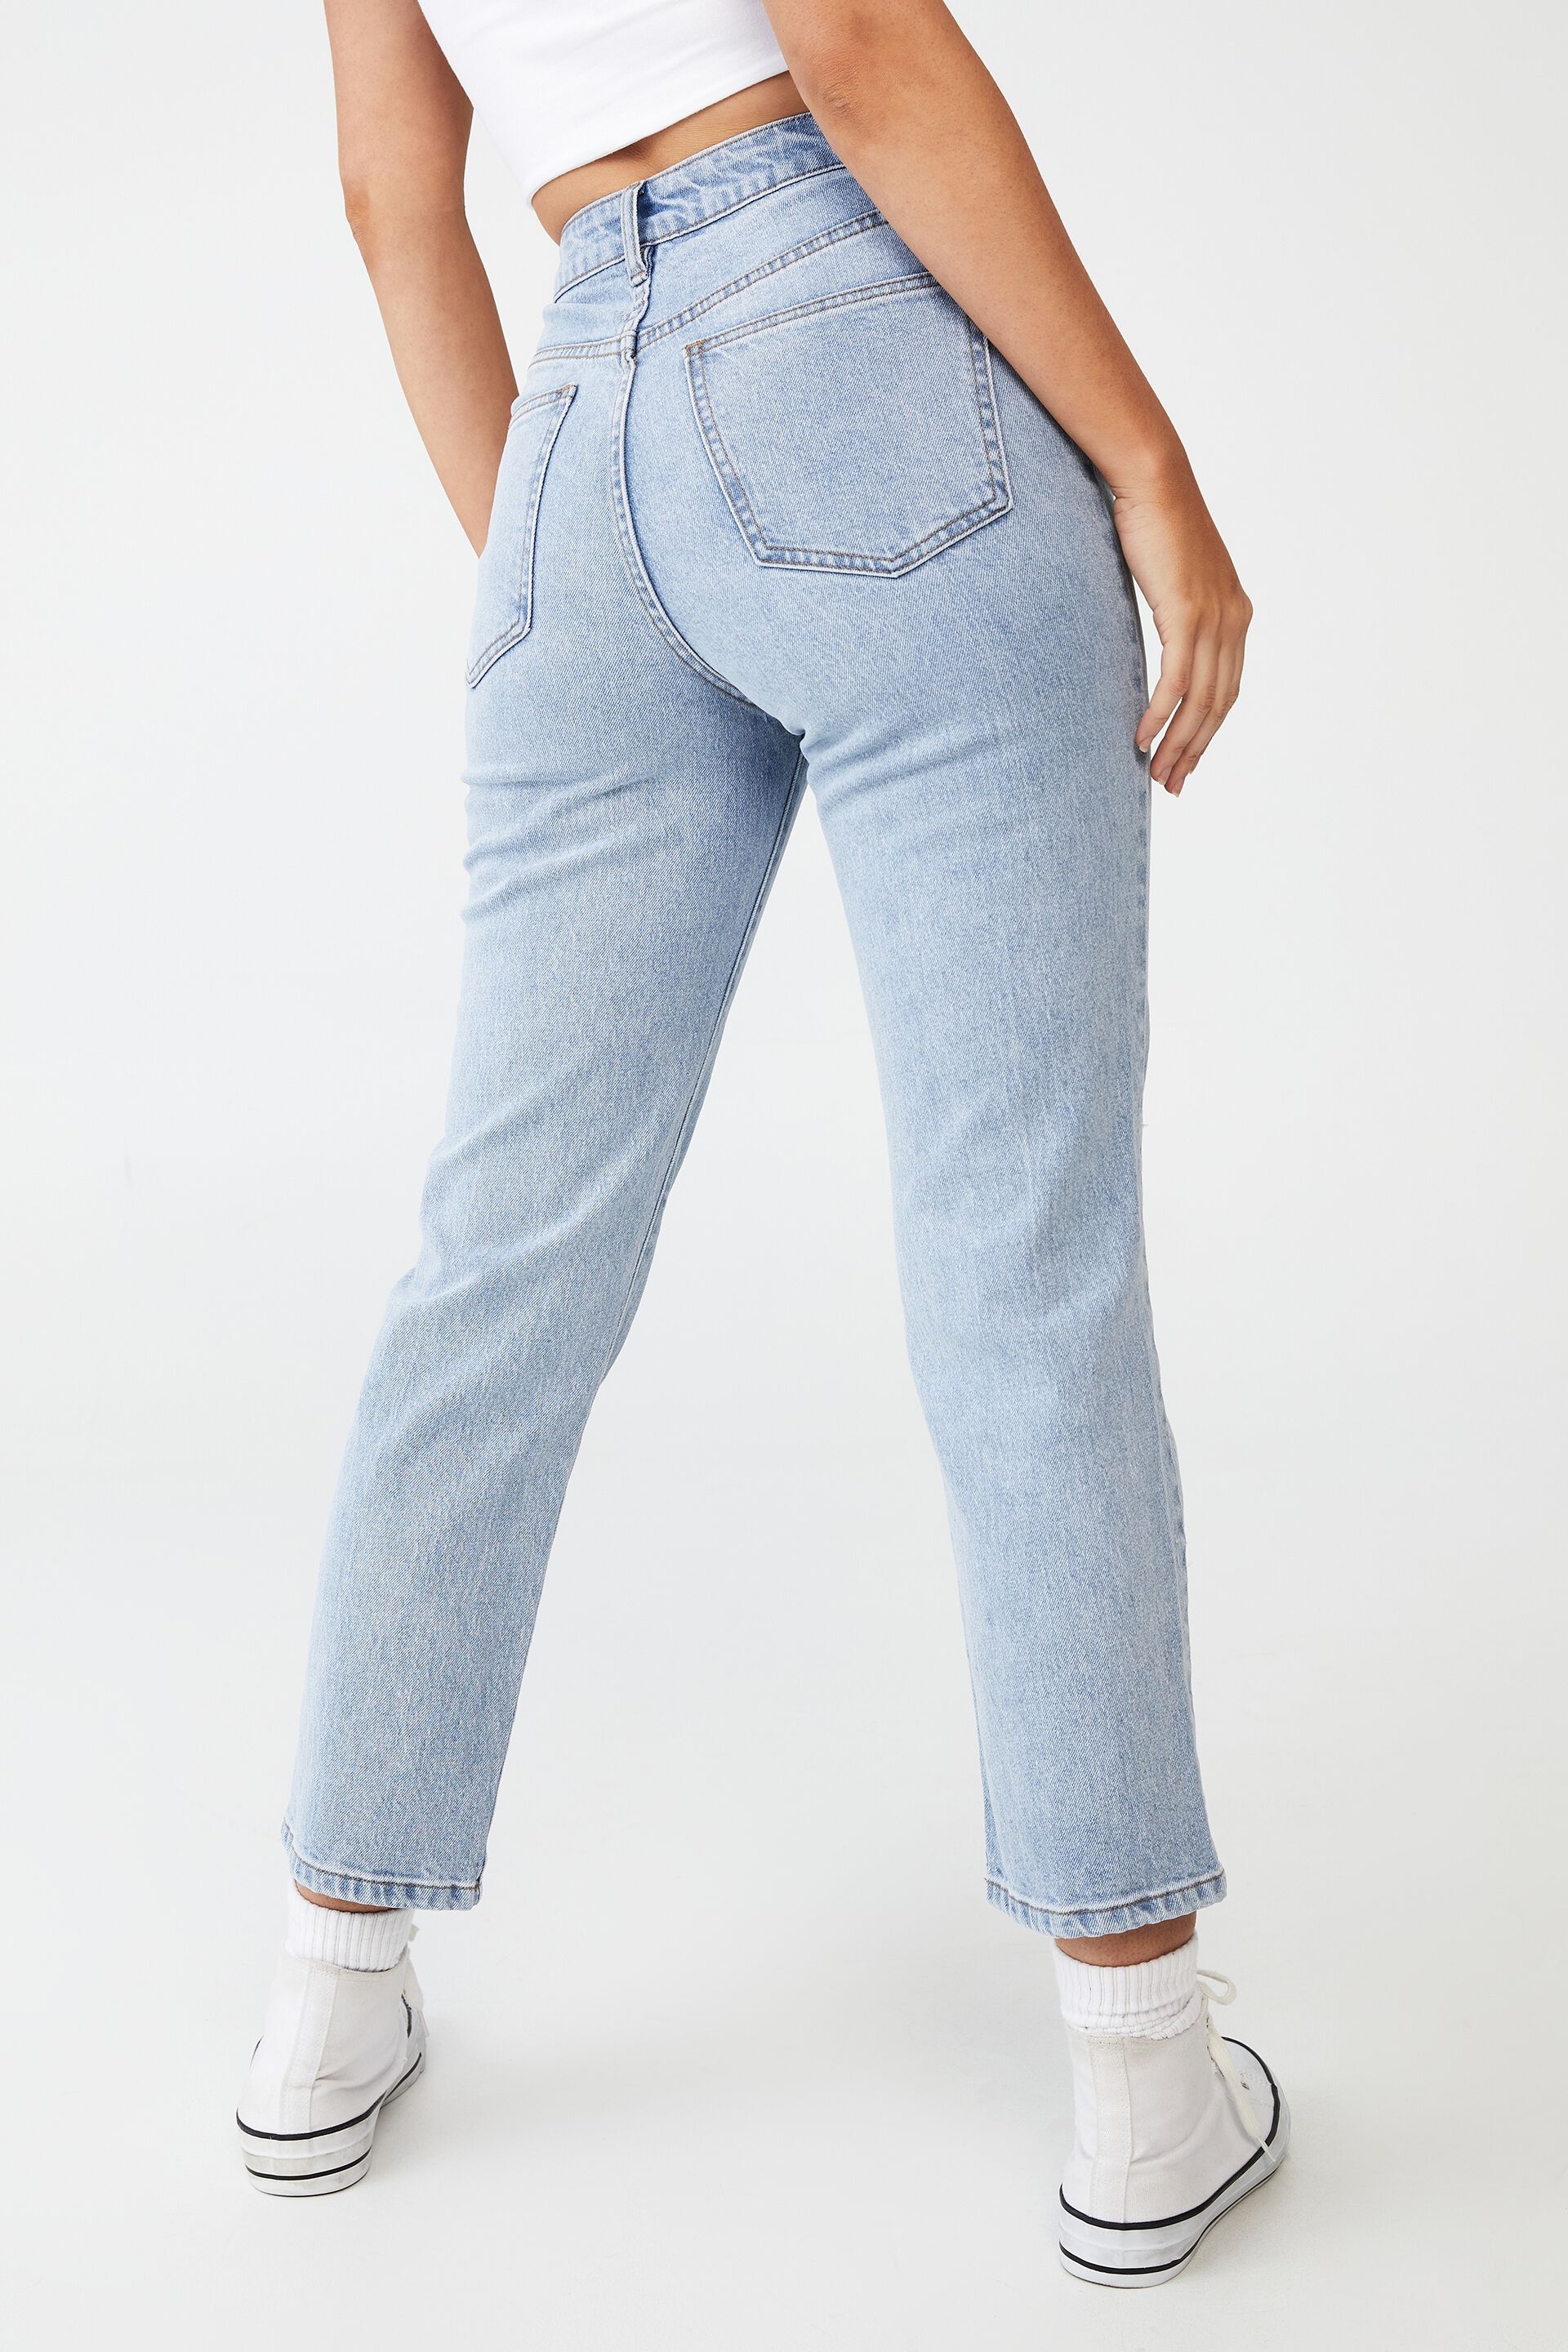 discount 71% Blue 38                  EU WOMEN FASHION Jeans Straight jeans Strech Colcci straight jeans 